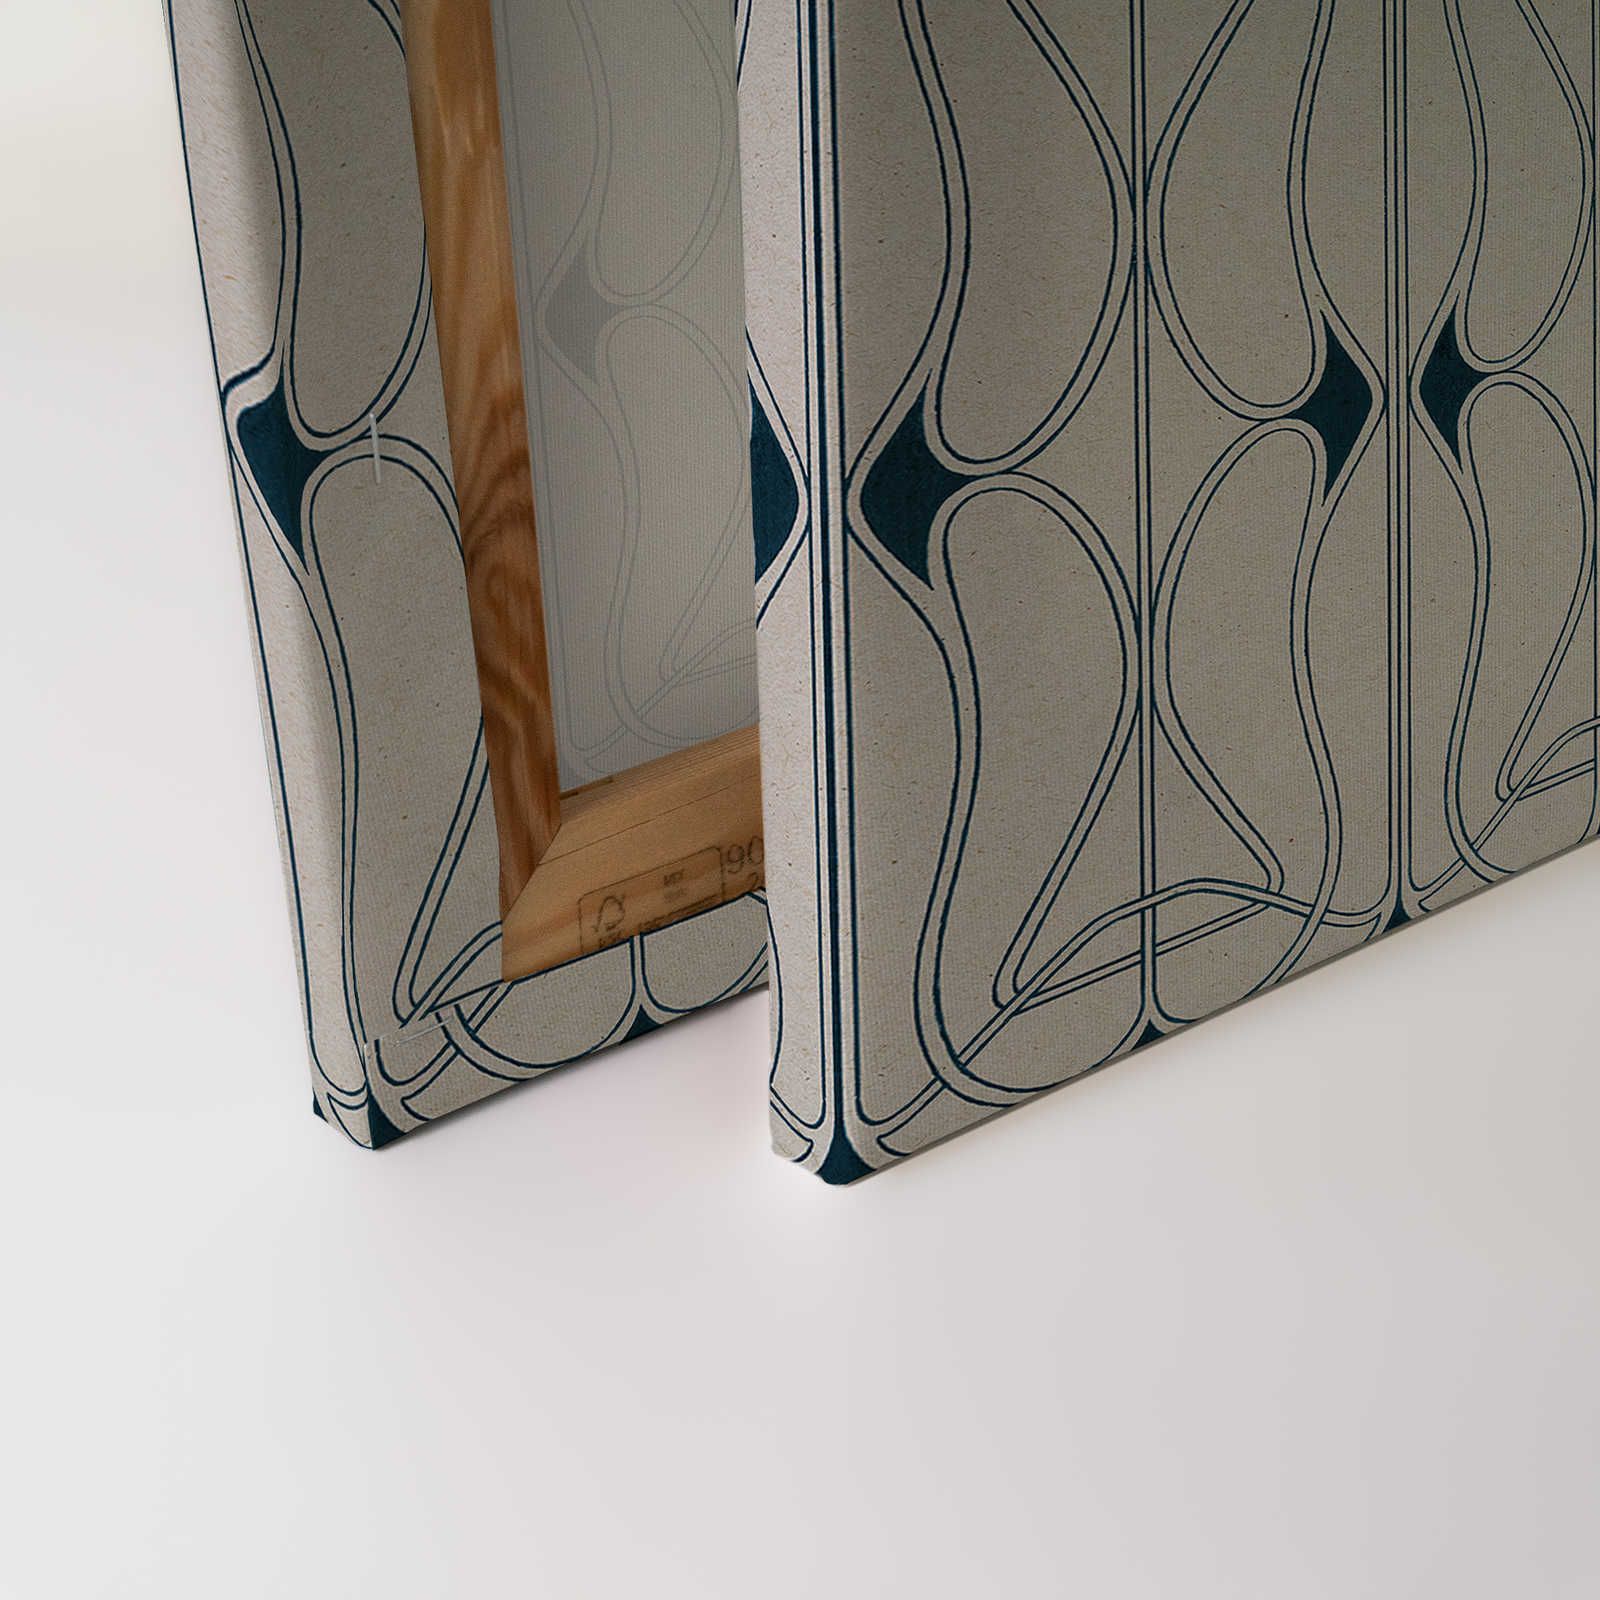             Astoria 1 - Quadro su tela Art Nouveau Grigio e Nero Blu - 0,90 m x 0,60 m
        